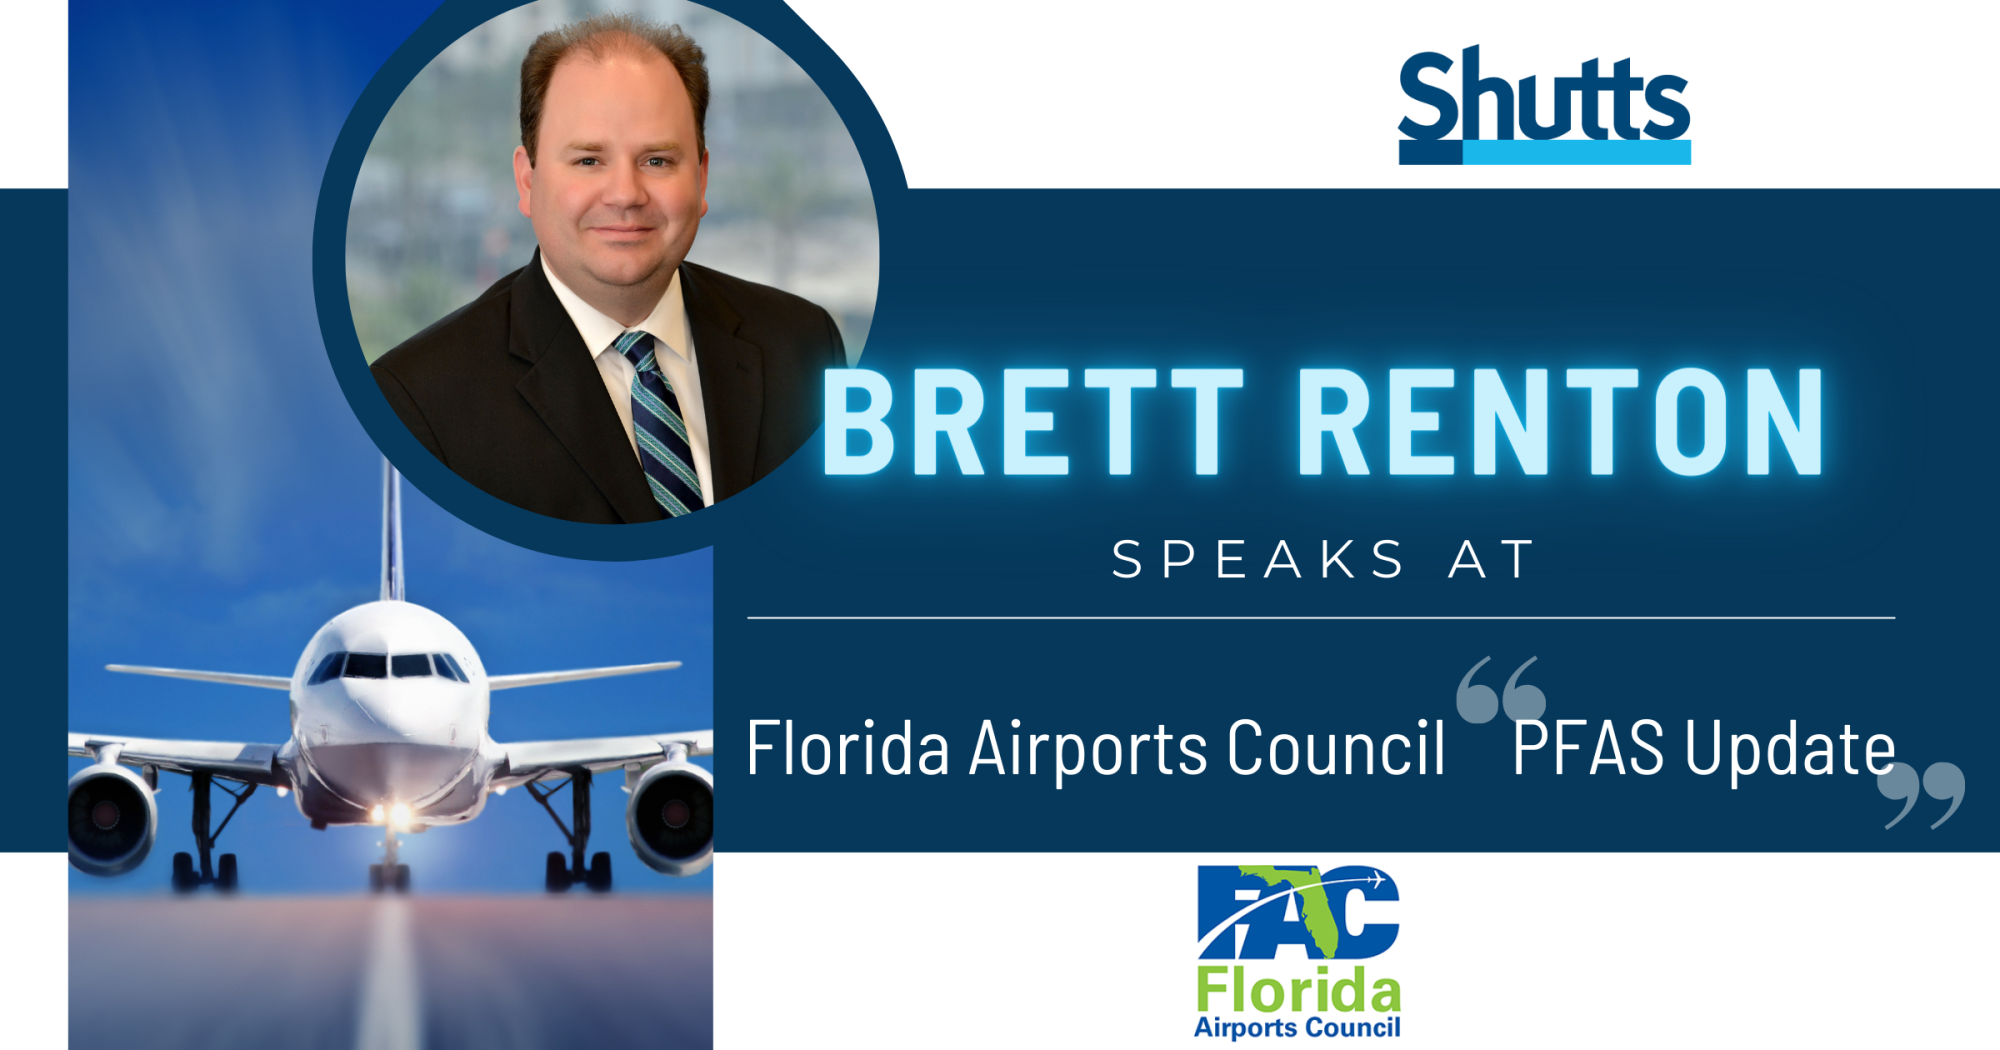 Brett Renton Speaks at Florida Airports Council PFAS Update